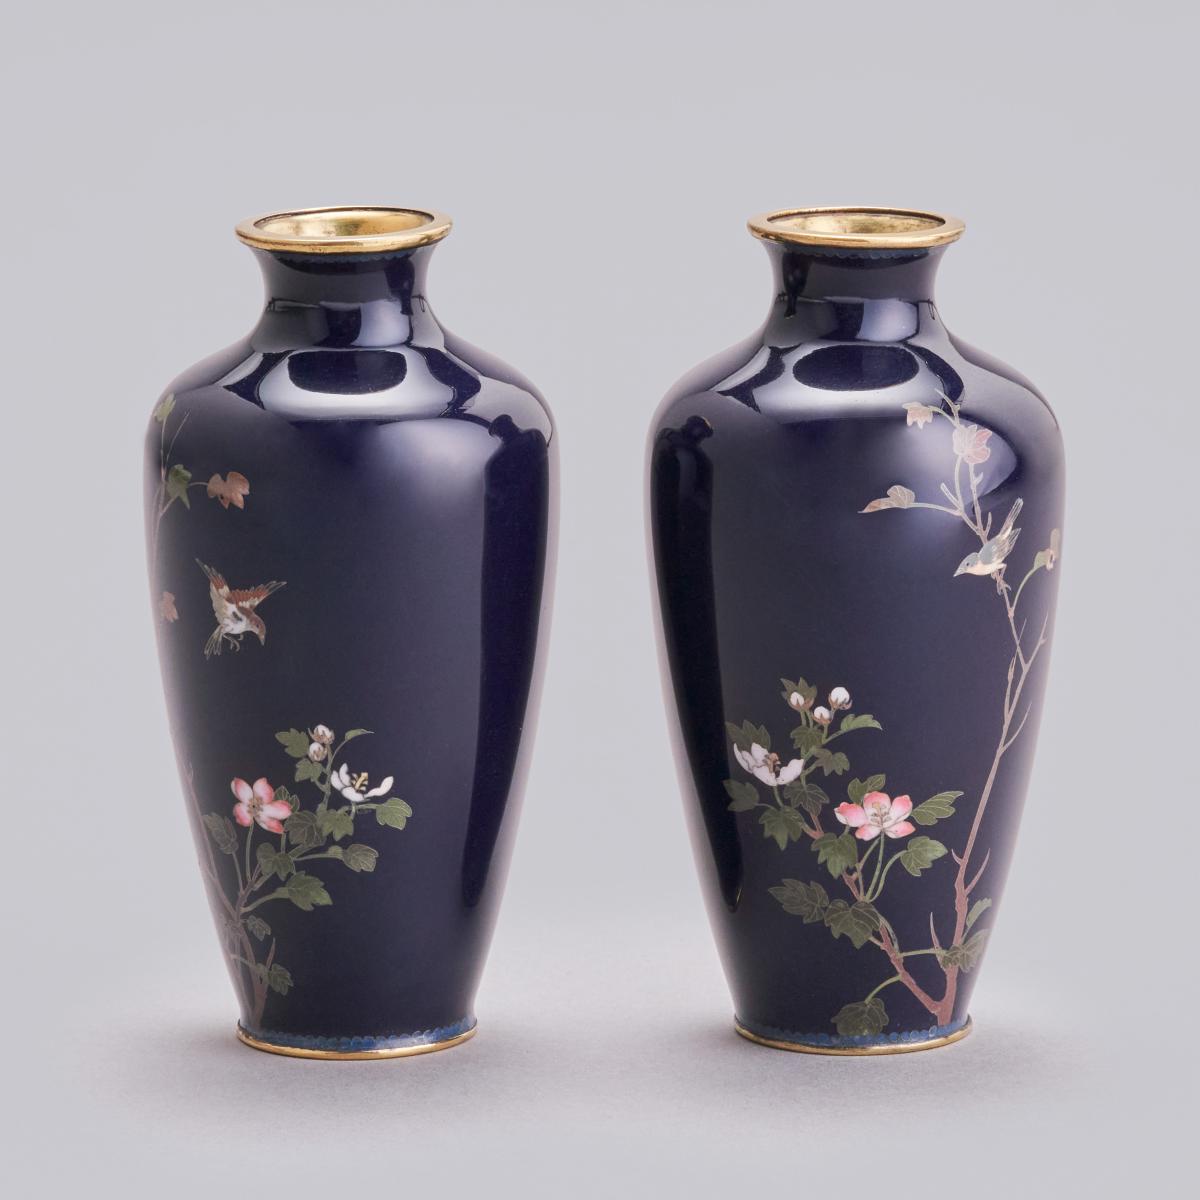 Japanese pair of cloisonné enamel vases signed Ito Soemon, Meiji Period